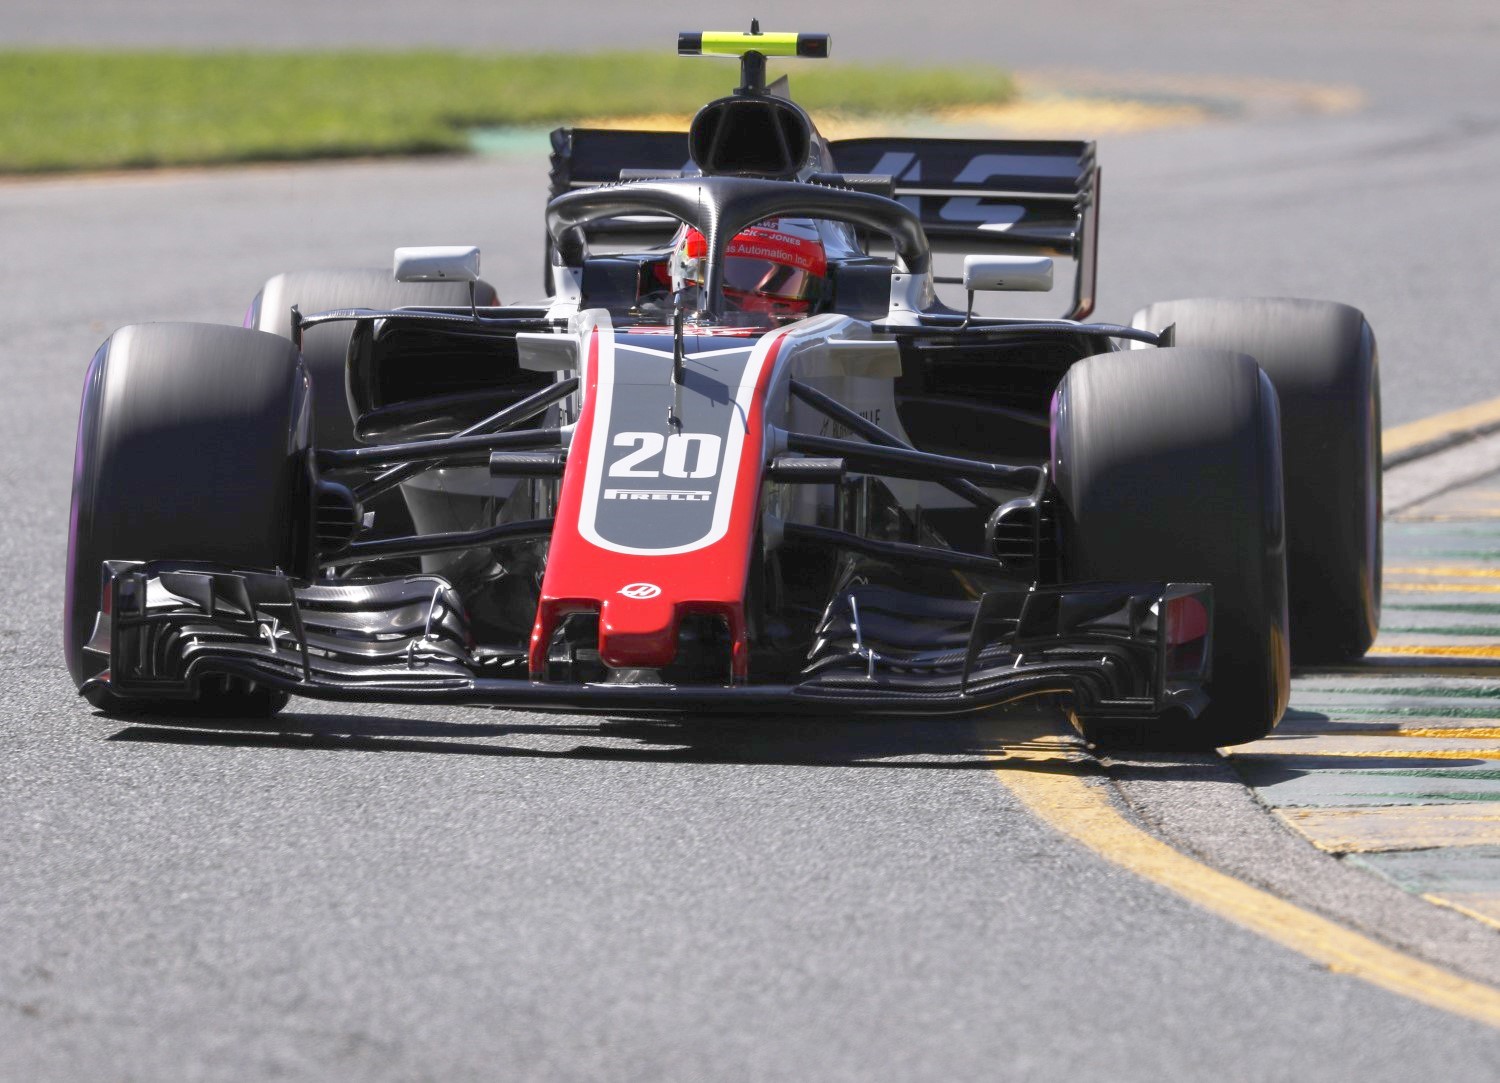 Magnussen in the Haas-Ferrari close is faster than the hapless McLaren team